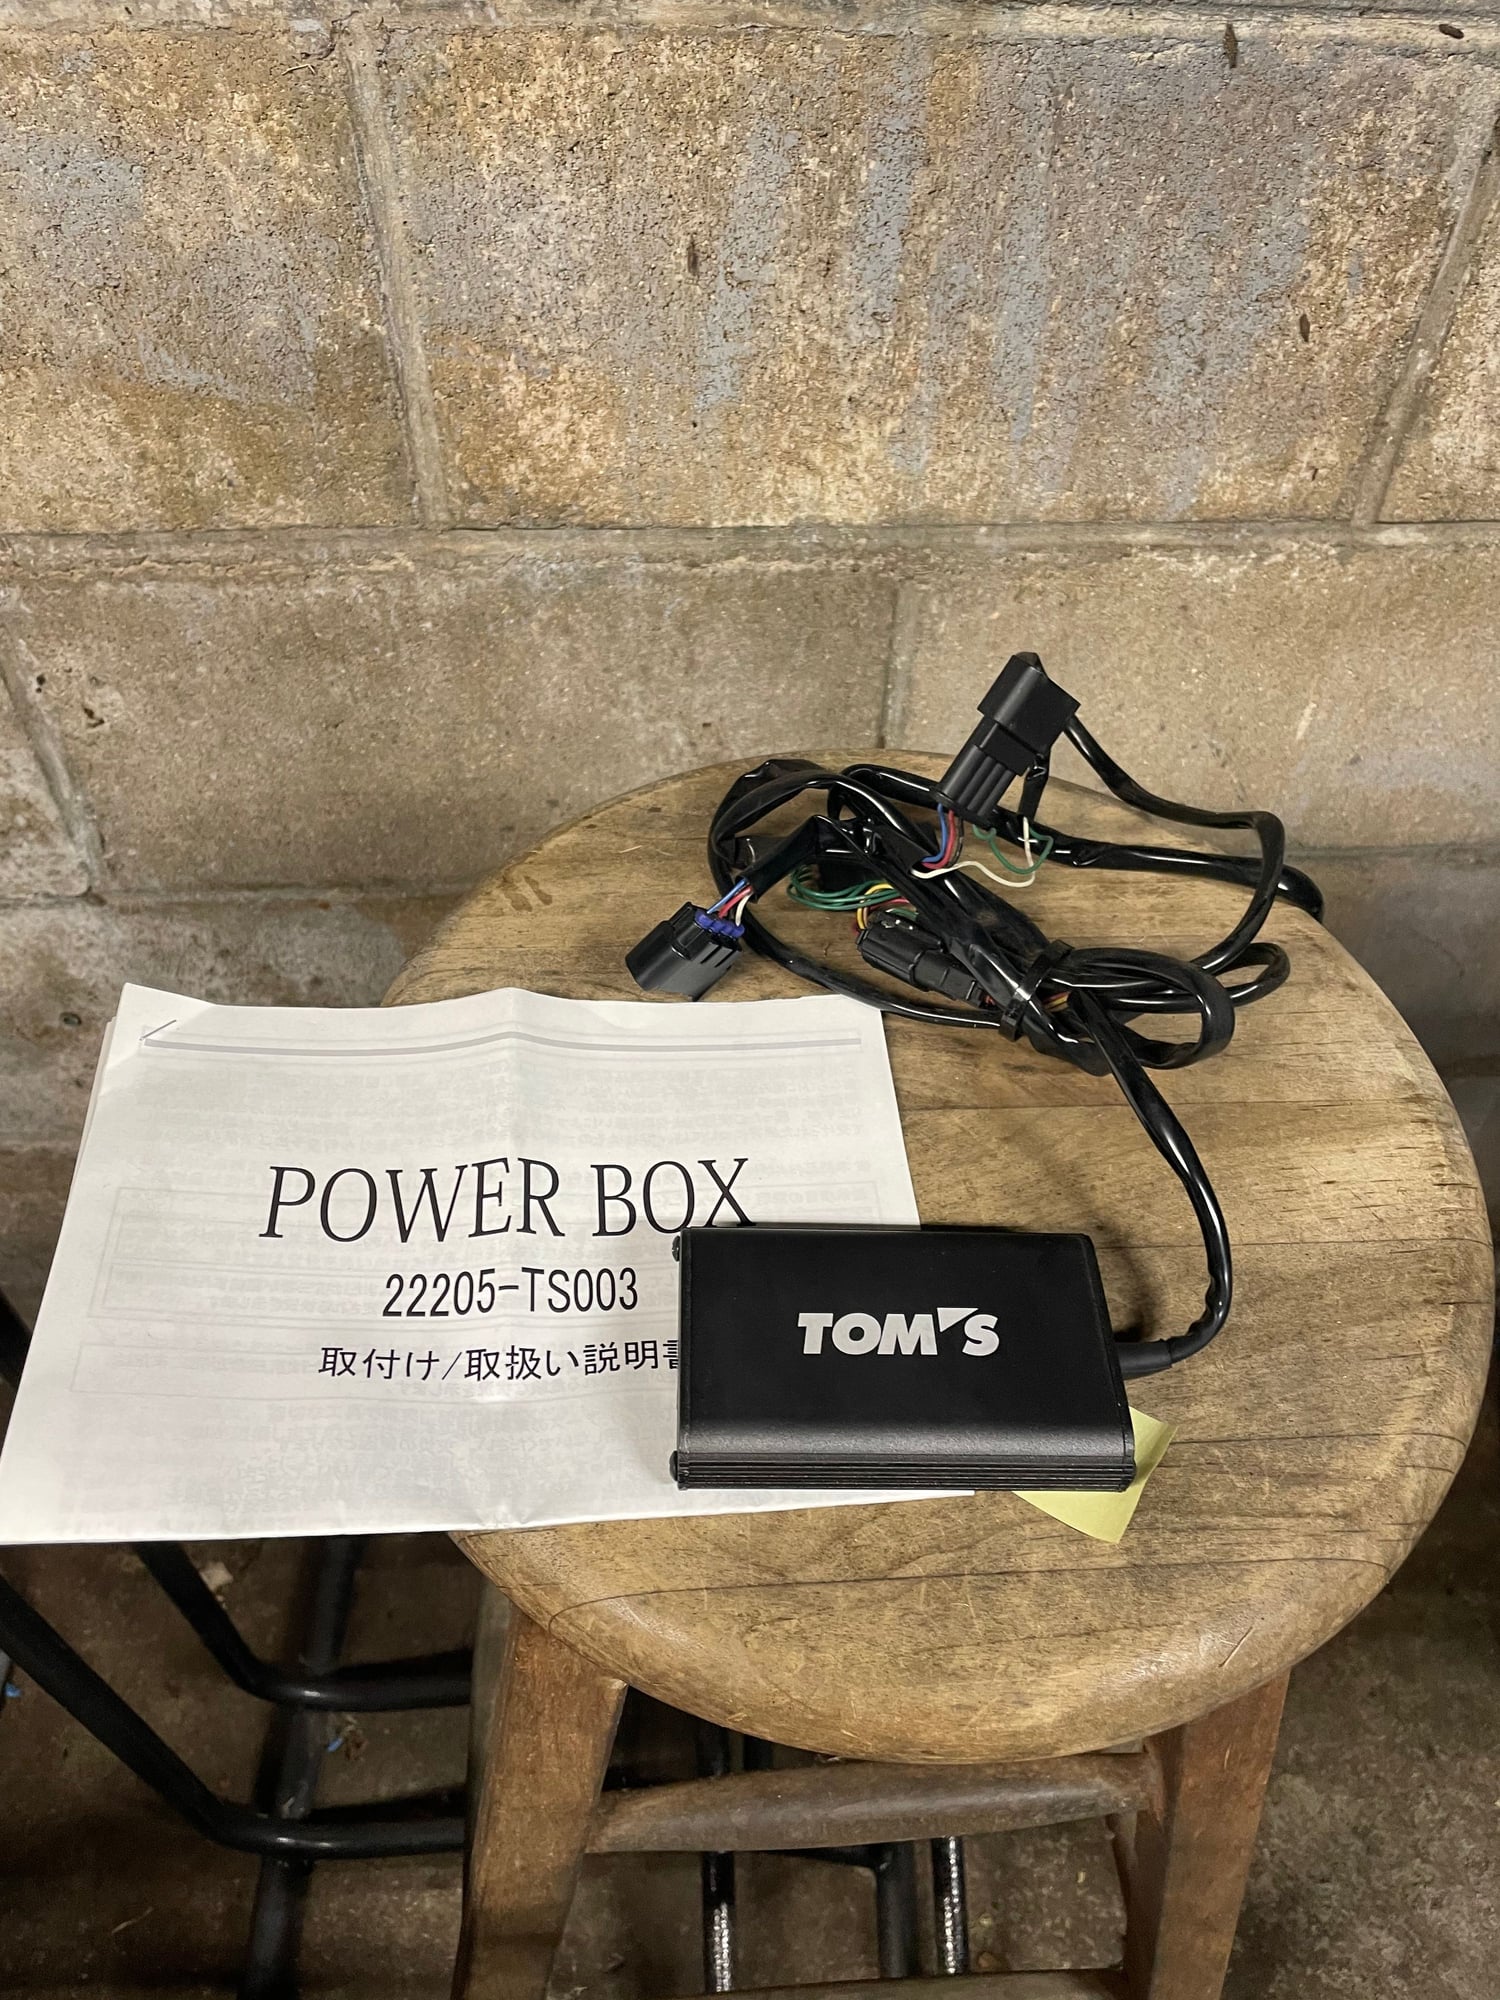 Engine - Electrical - Tom’s boost box - Used - 2018 to 2022 Lexus LS500 - Honolulu, HI 96822, United States